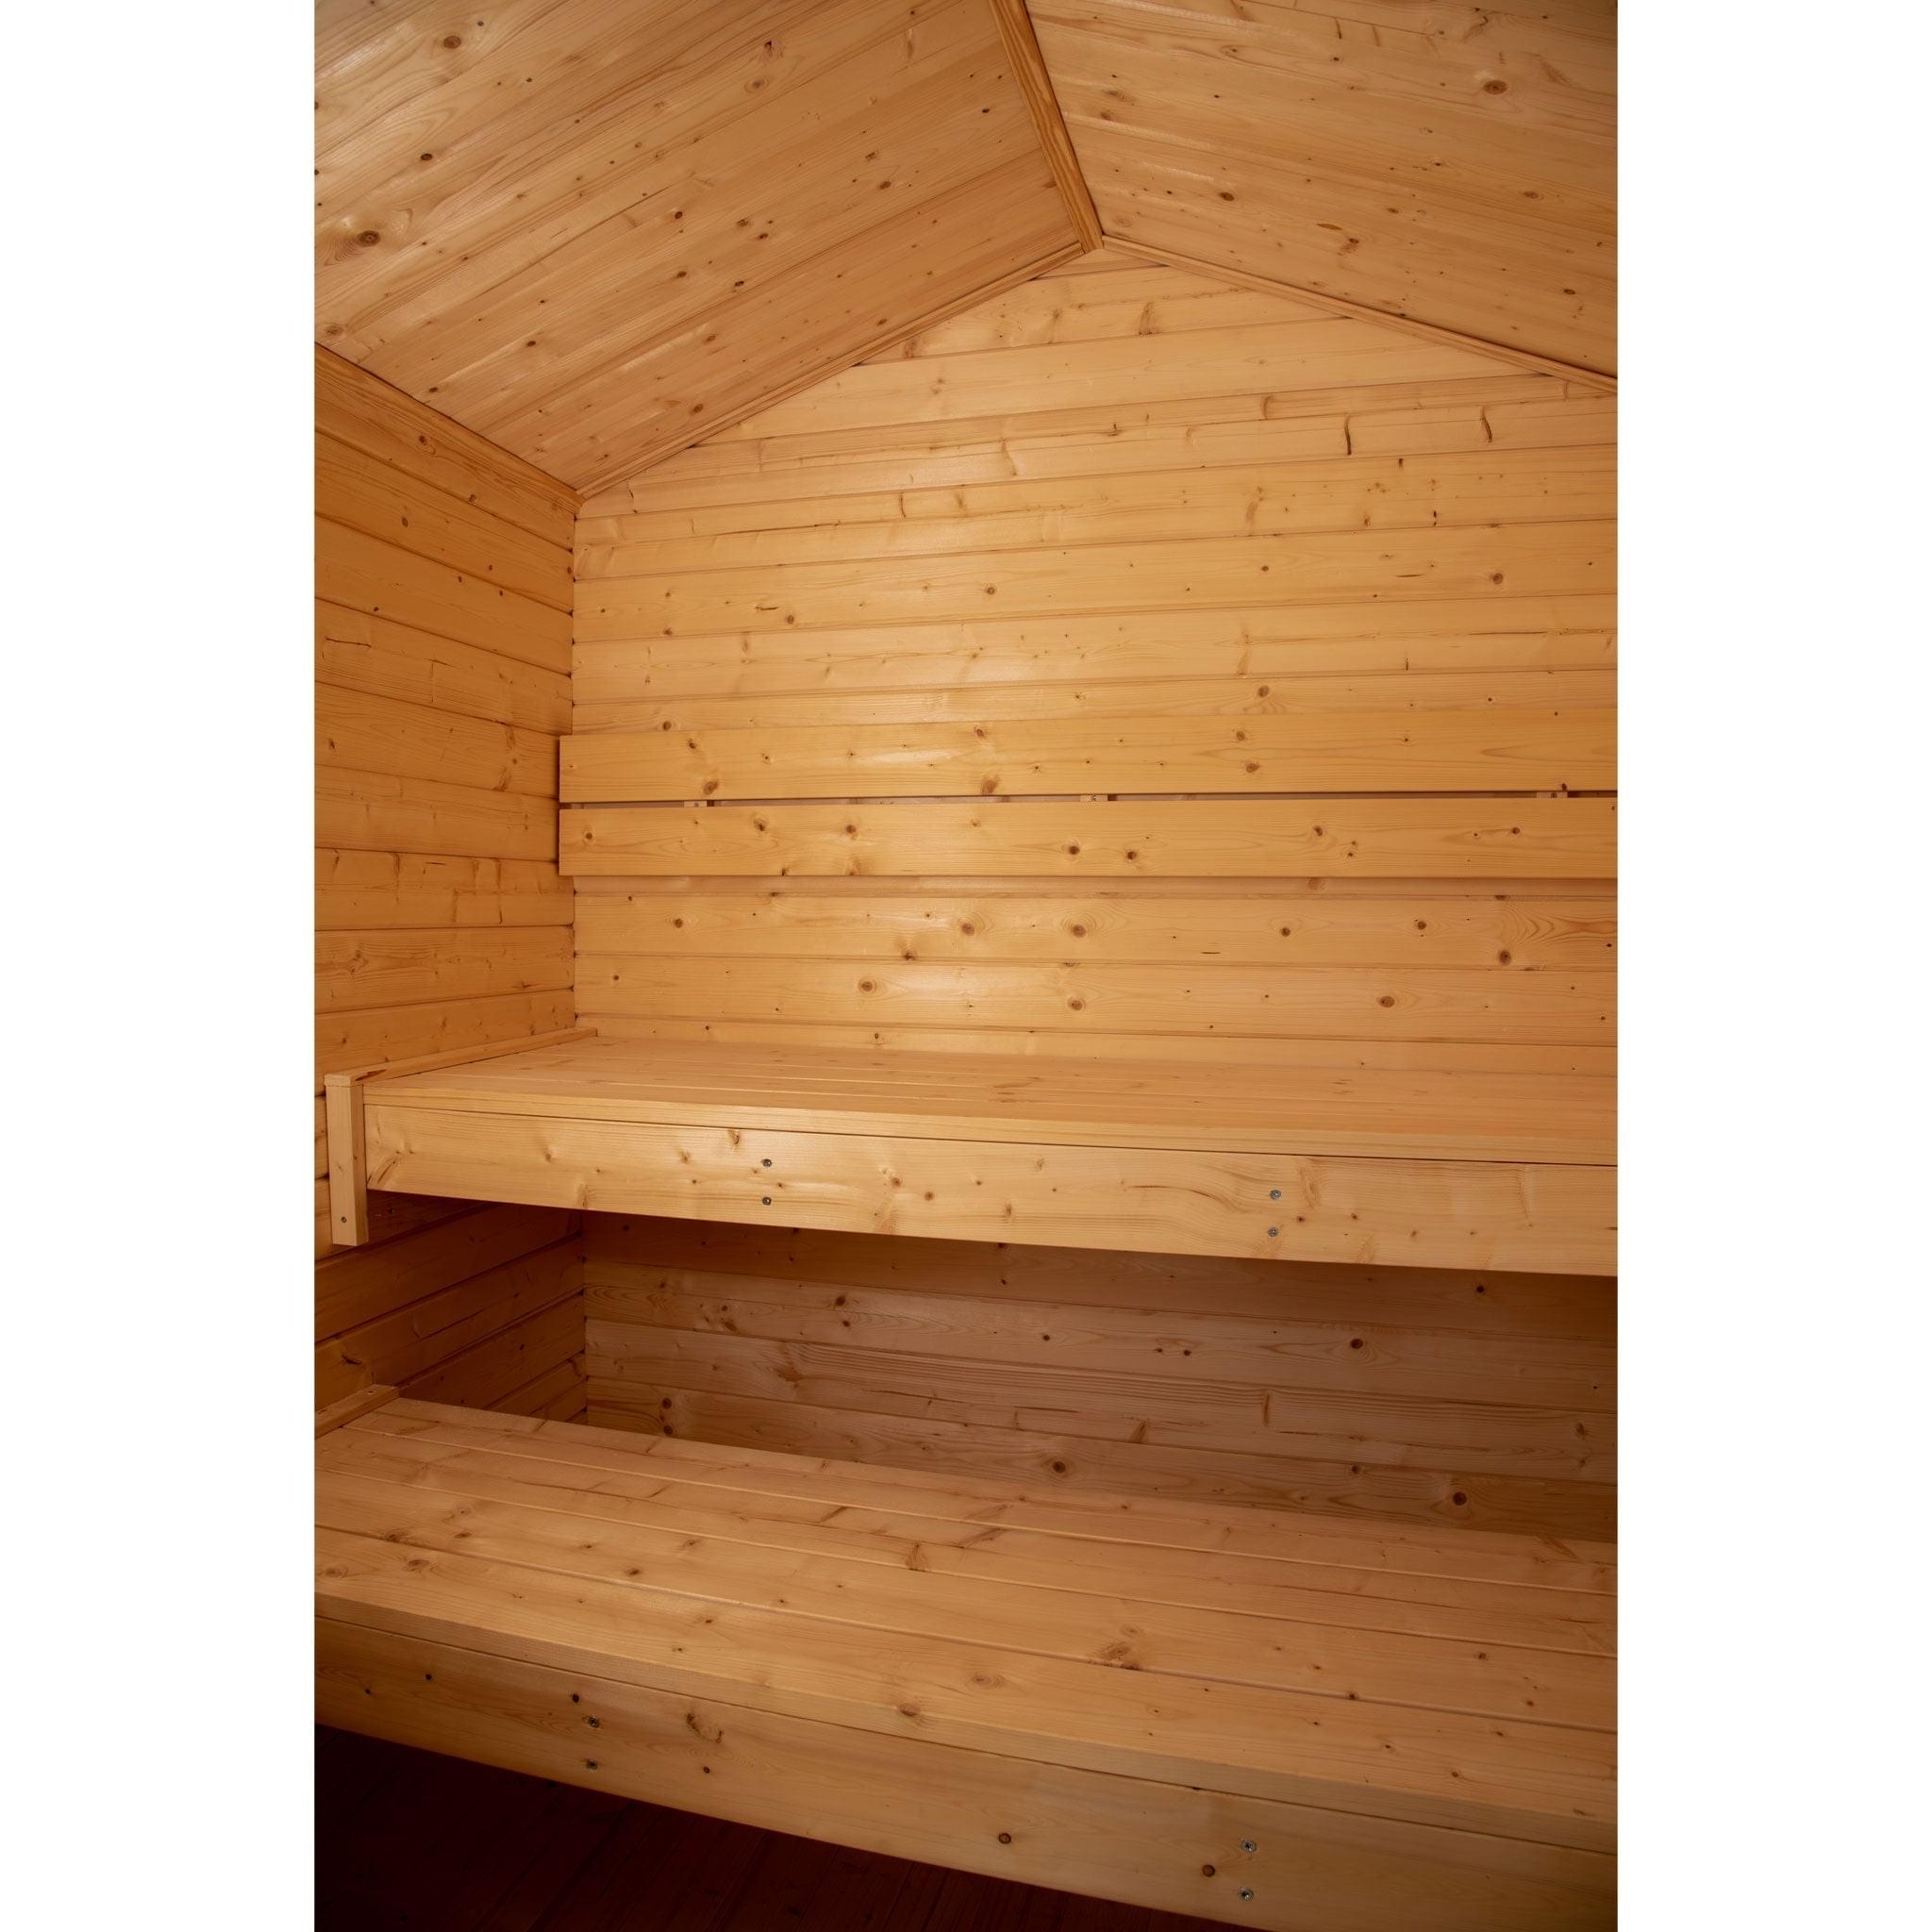 Almost Heaven Allegheny 4-Person Outdoor Cabin Sauna